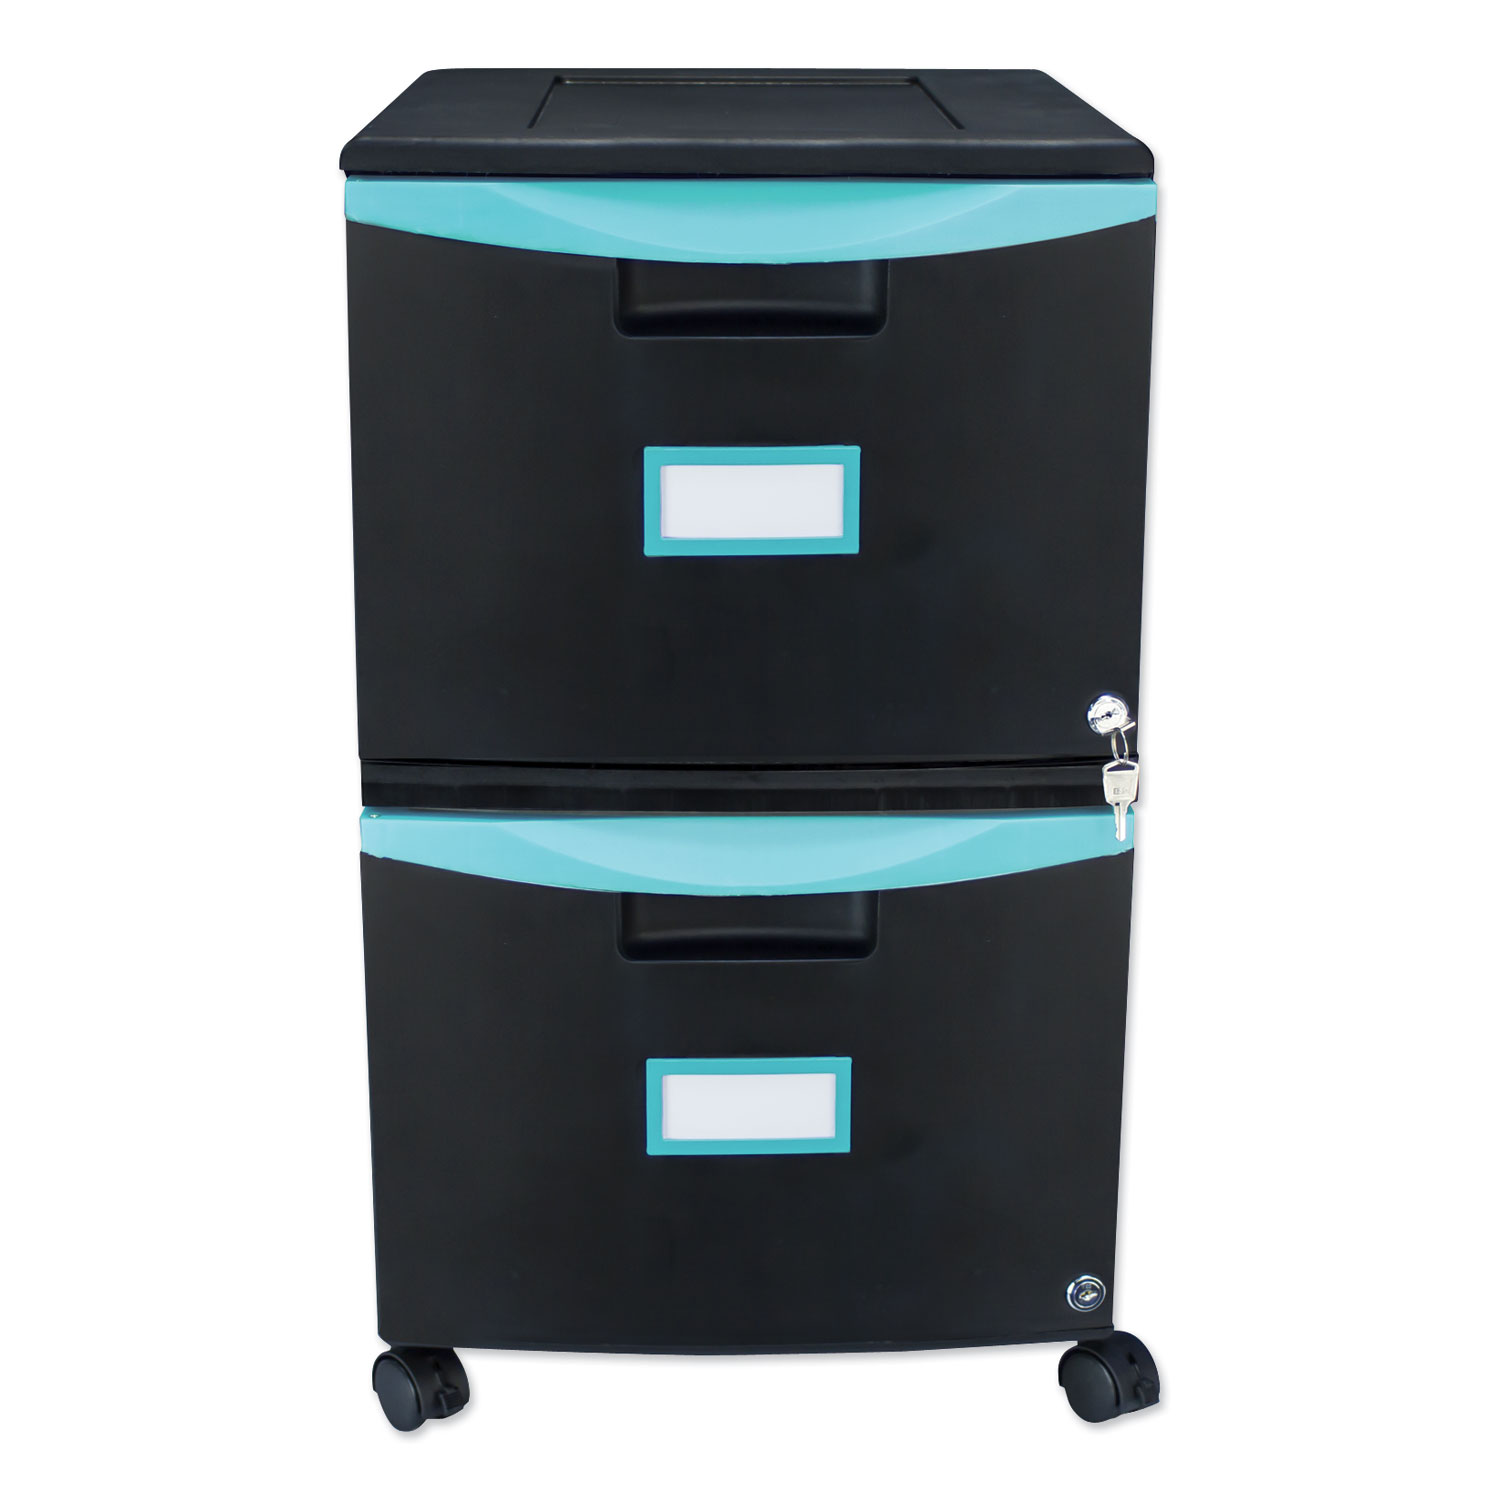  Storex 61315U01C Two-Drawer Mobile Filing Cabinet, 14.75w x 18.25d x 26h, Black/Teal (STX61315U01C) 